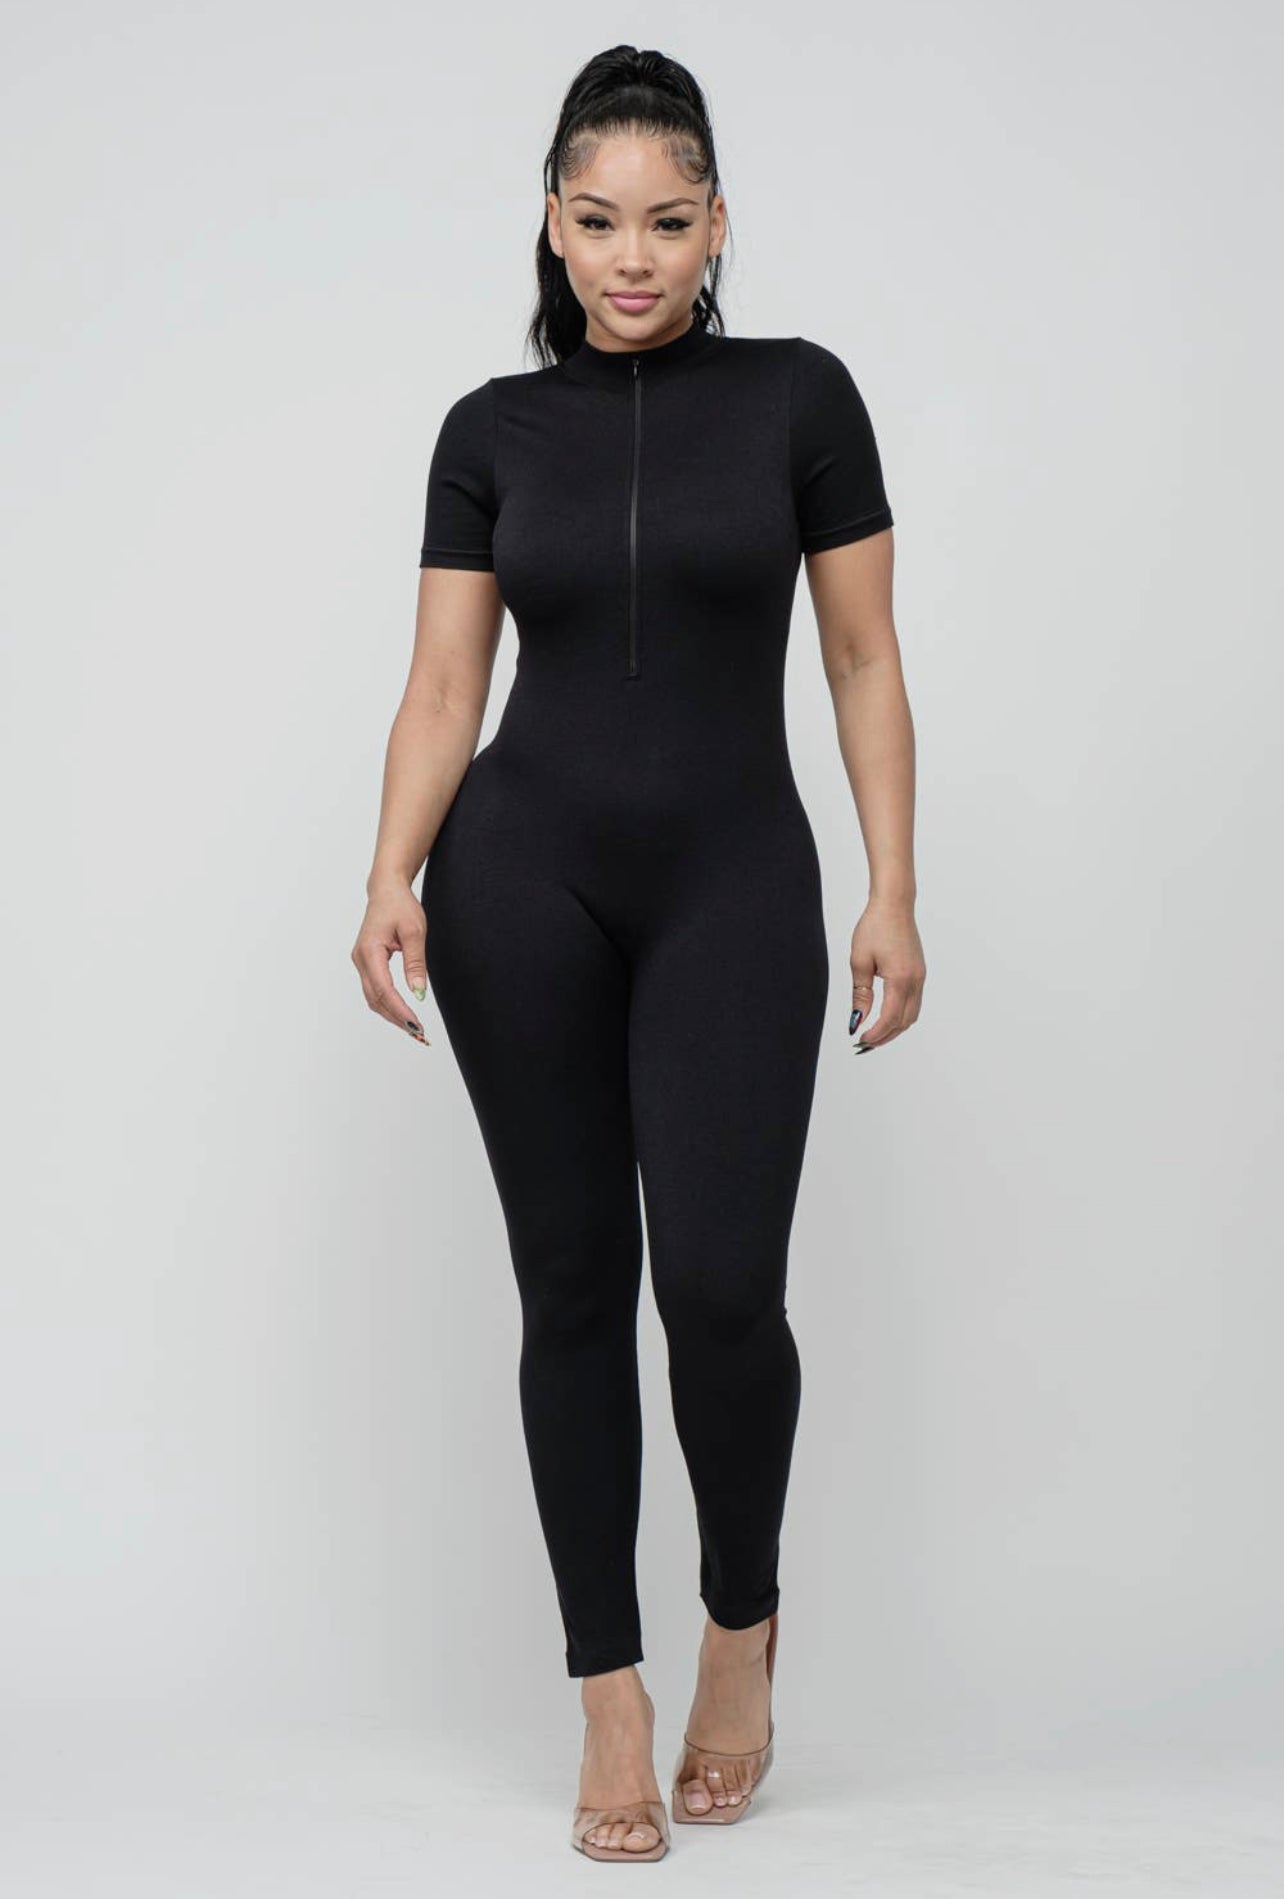 Shape Black Stretch Seamless Zip Front Long Sleeve Jumpsuit